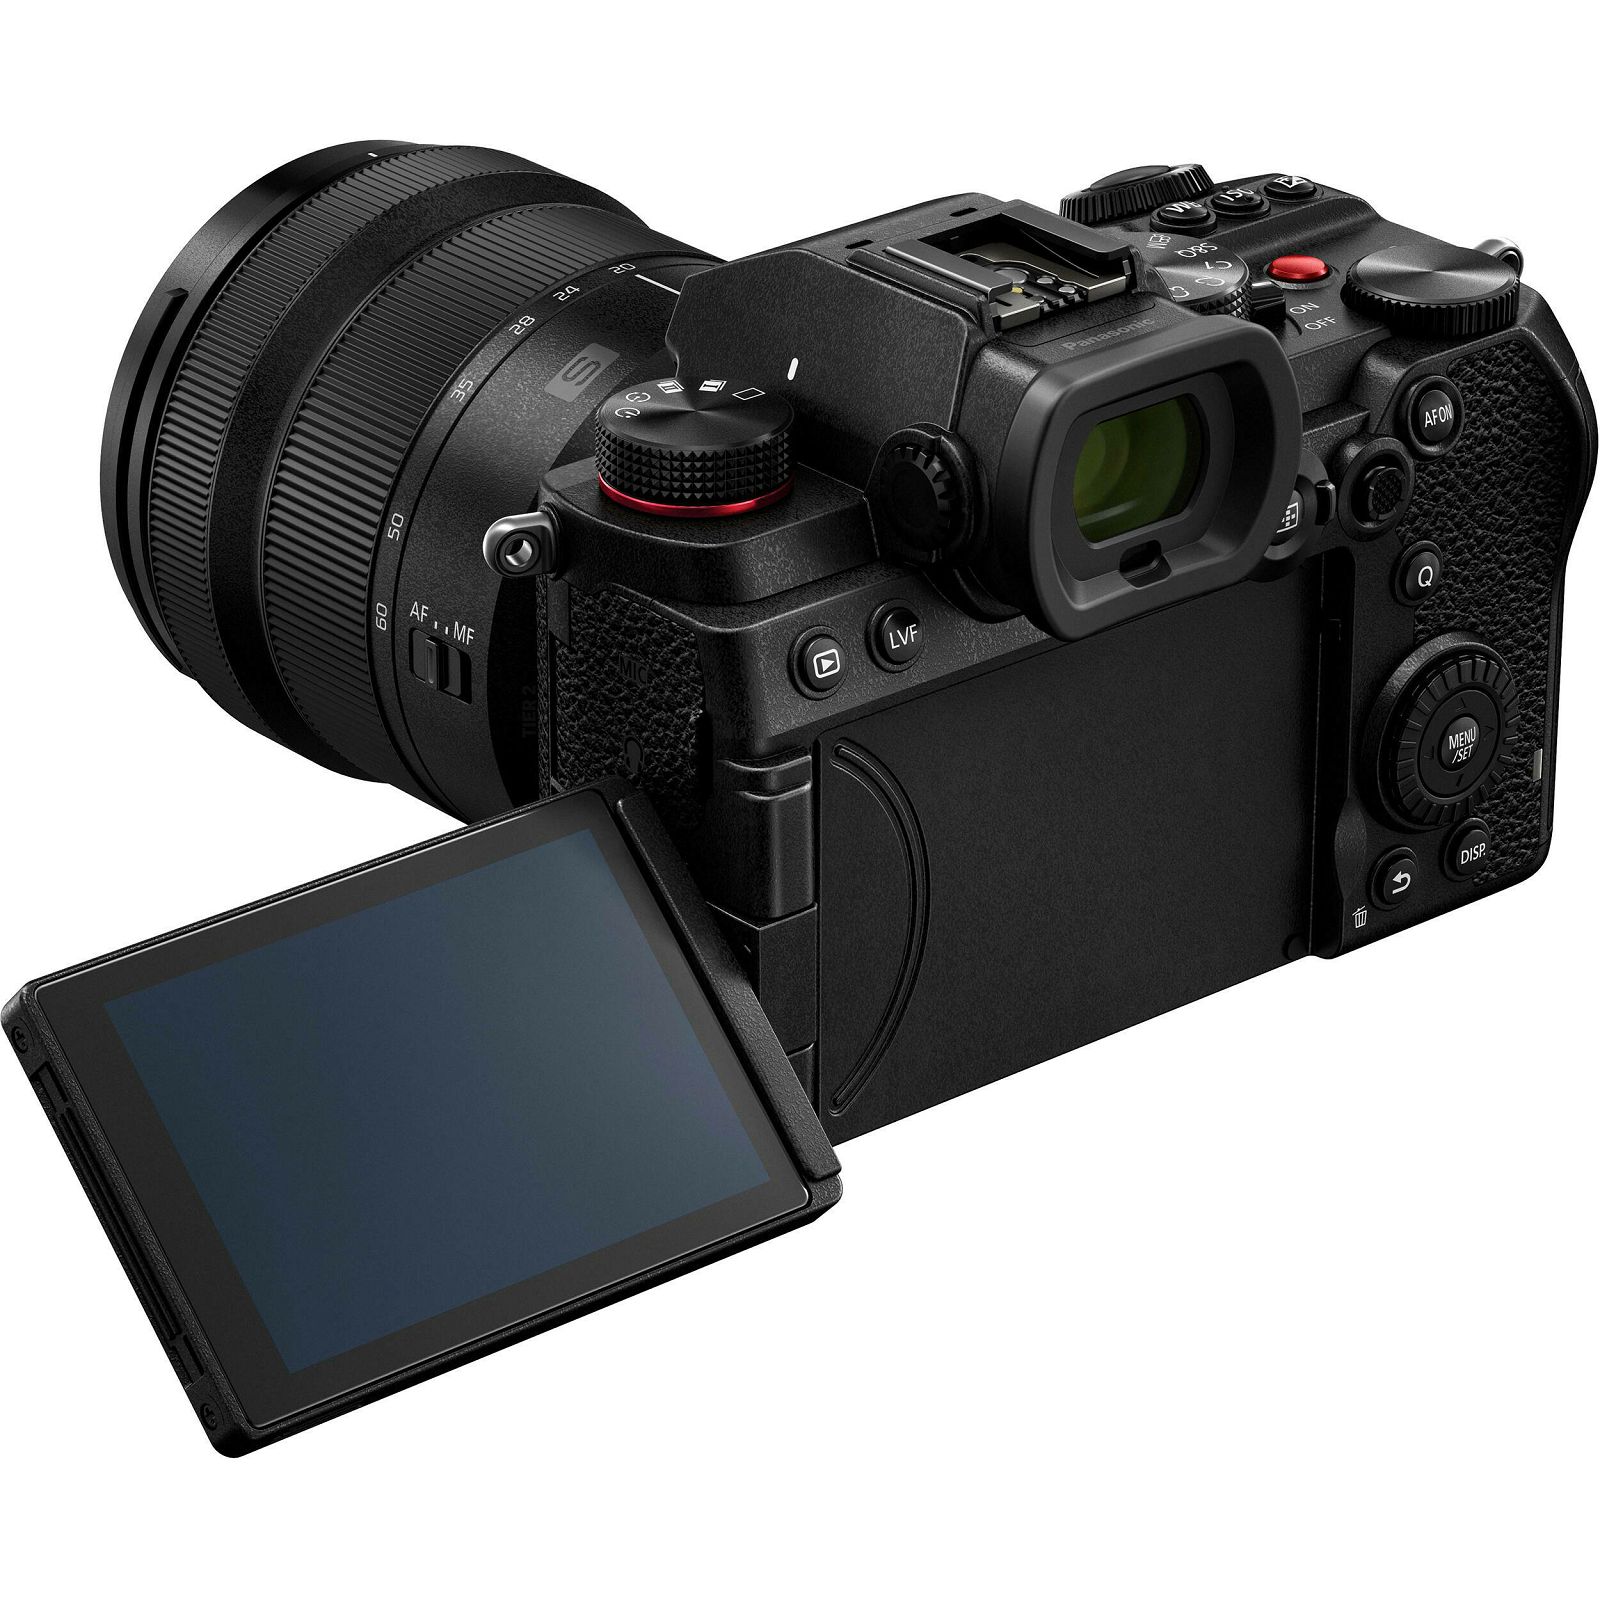 Panasonic Lumix DC-S5 + S 20-60mm f/3.5-5.6 Mirrorless bezrcalni digitalni fotoaparat tijelo s objektivom Full Frame Digital Camera (DC-S5KE-K) - CASH BACK